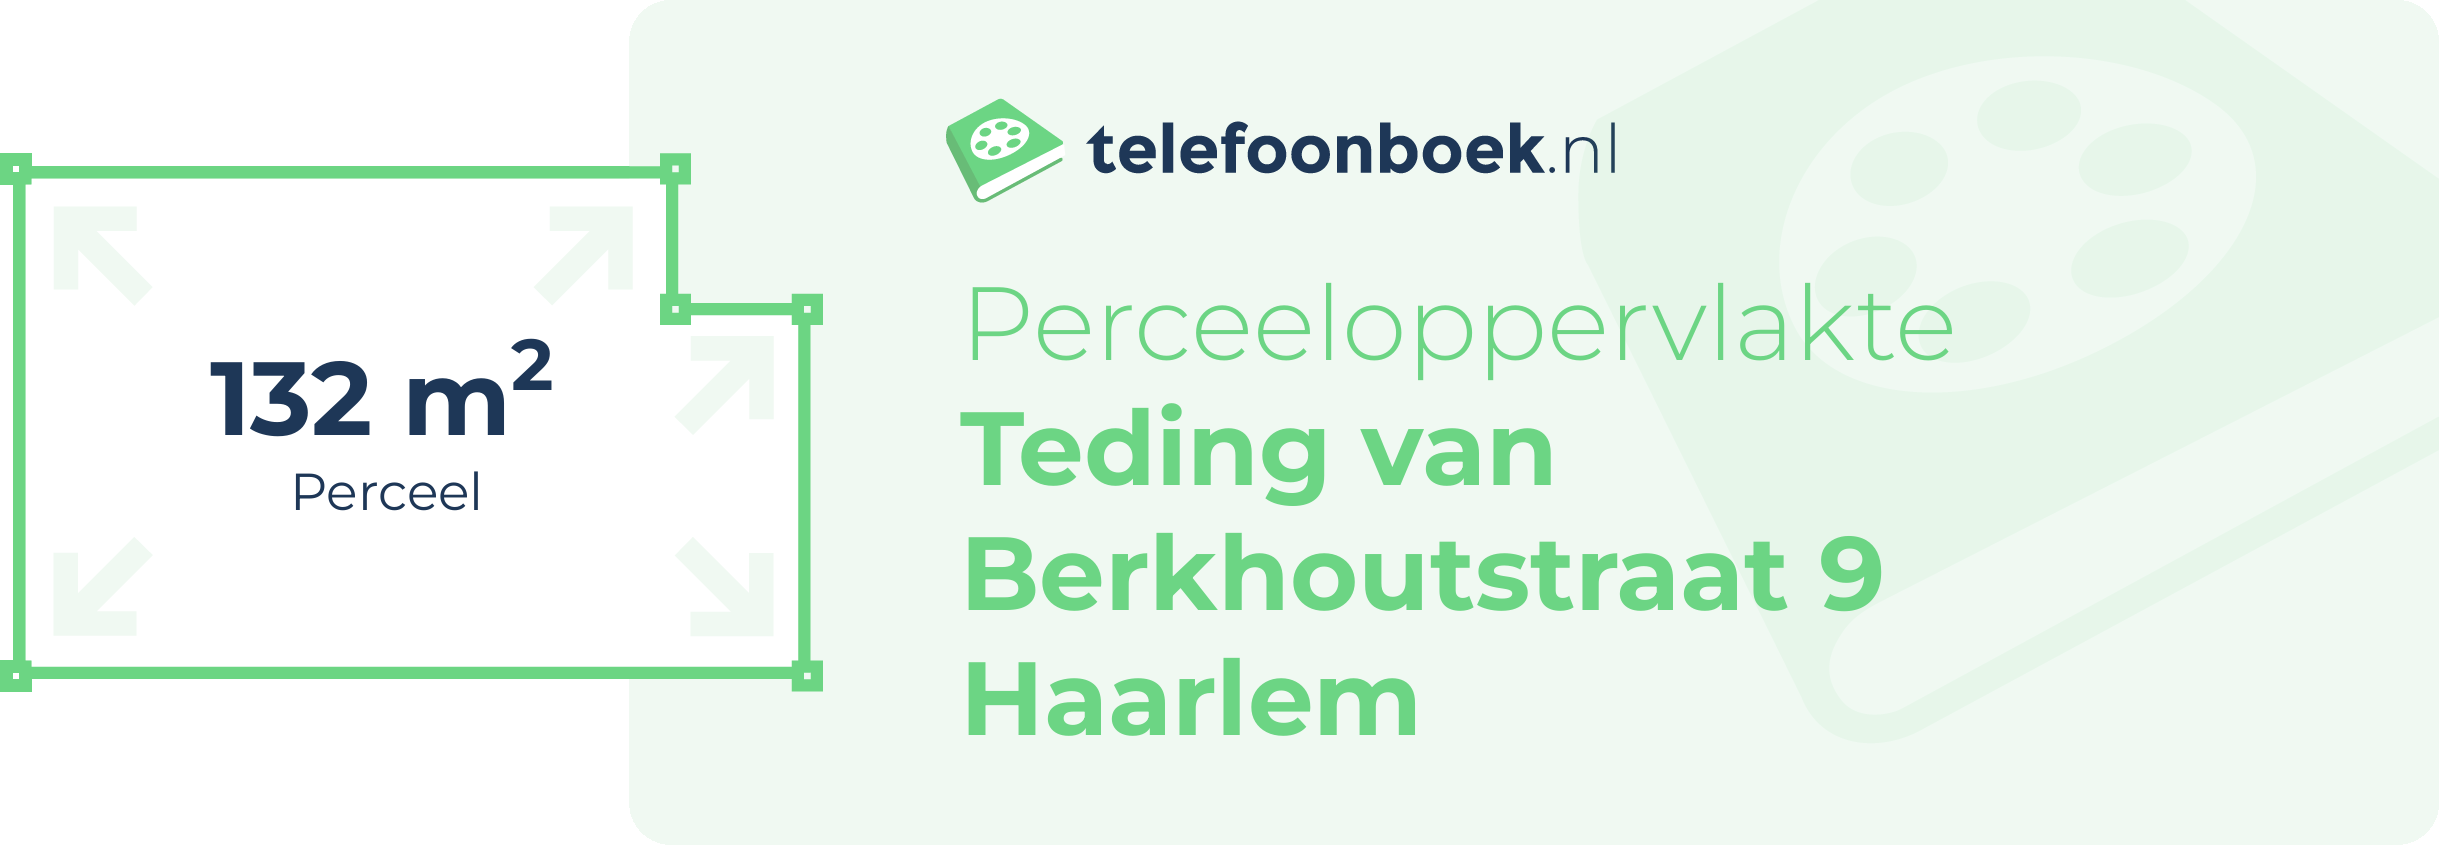 Perceeloppervlakte Teding Van Berkhoutstraat 9 Haarlem